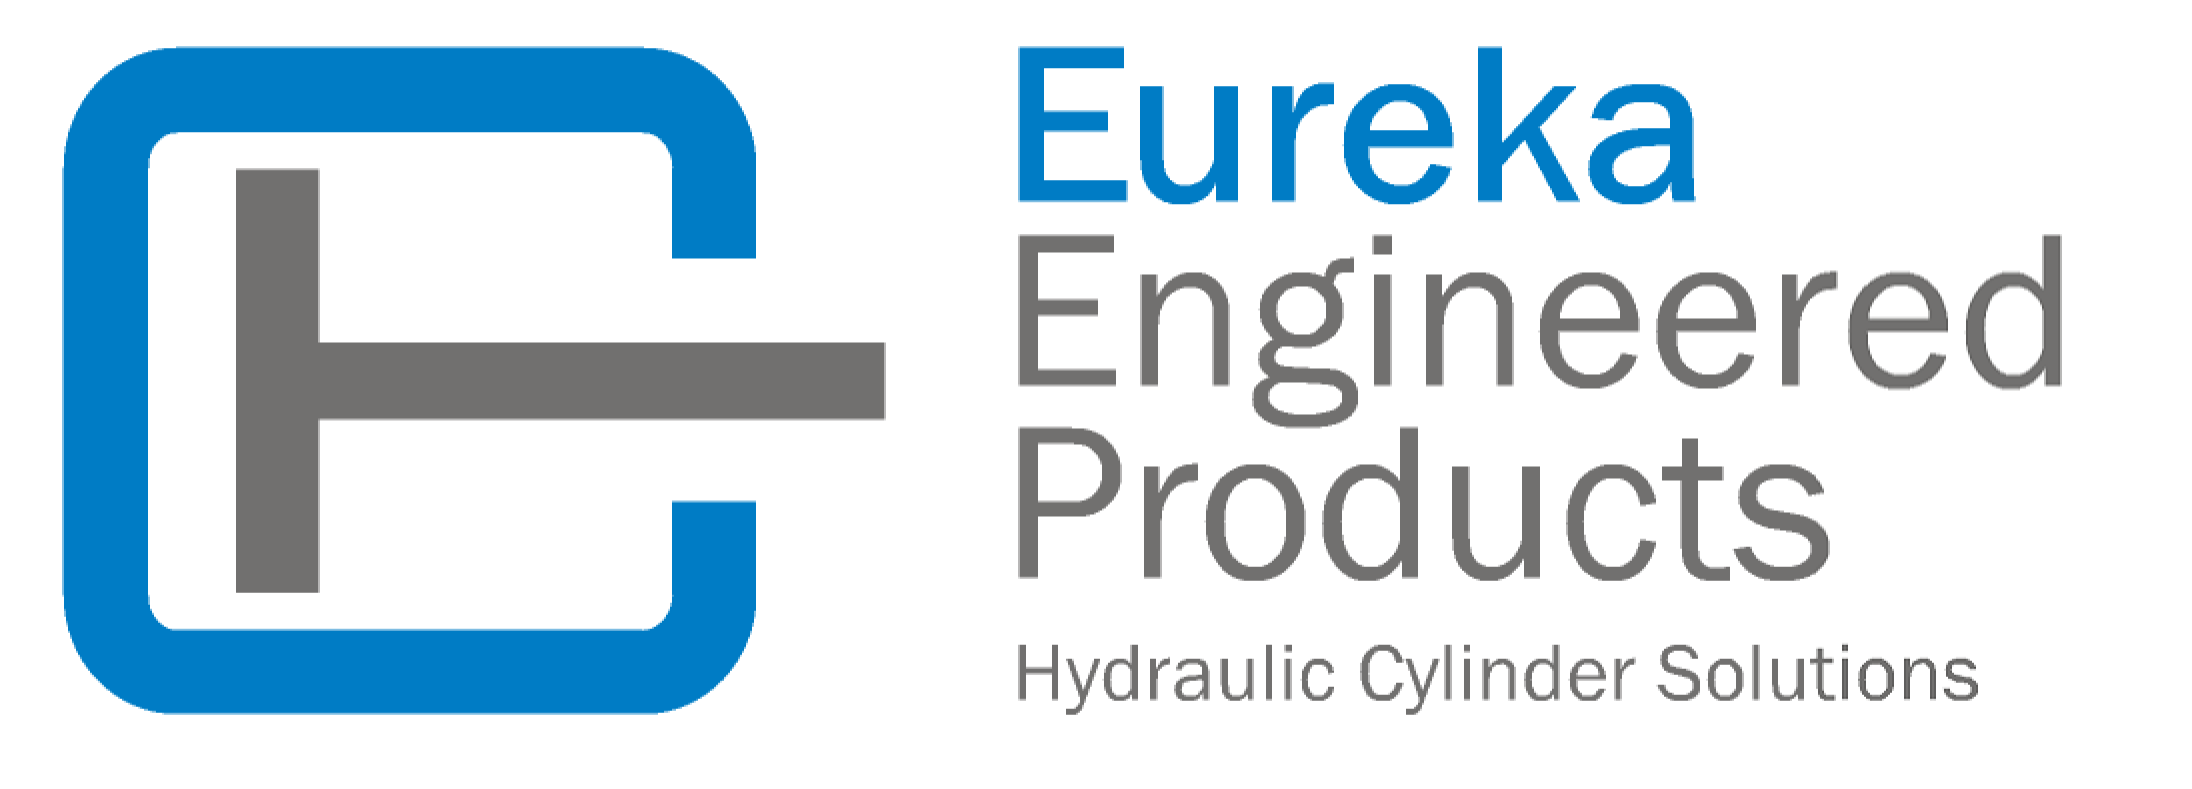 Eureka Engineered Products